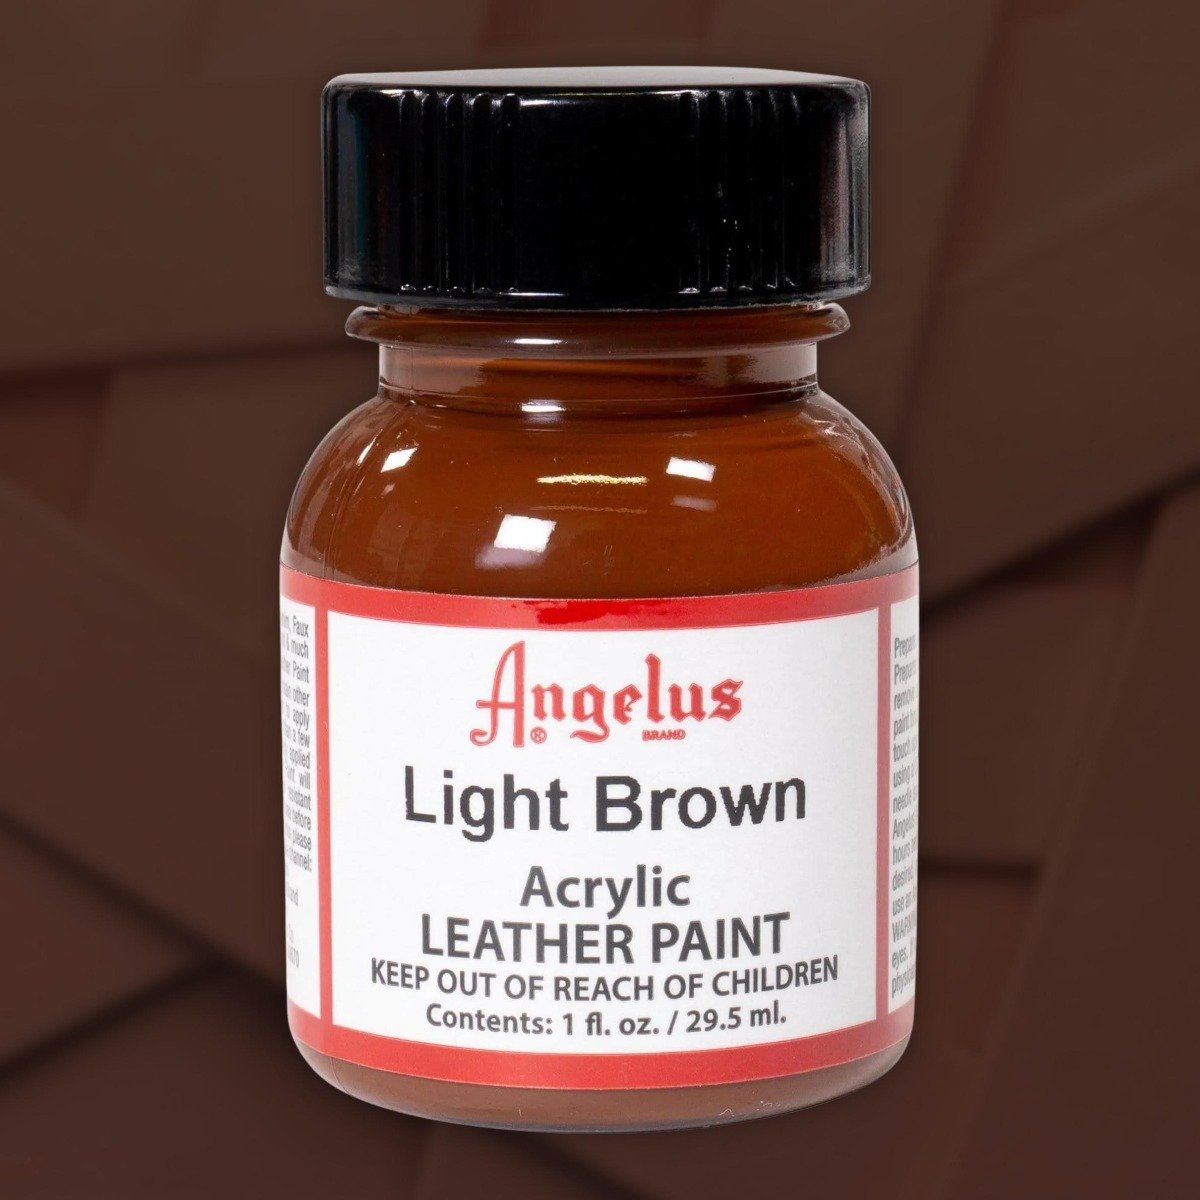 Angelus Leather Dye 3 oz - Medium Brown